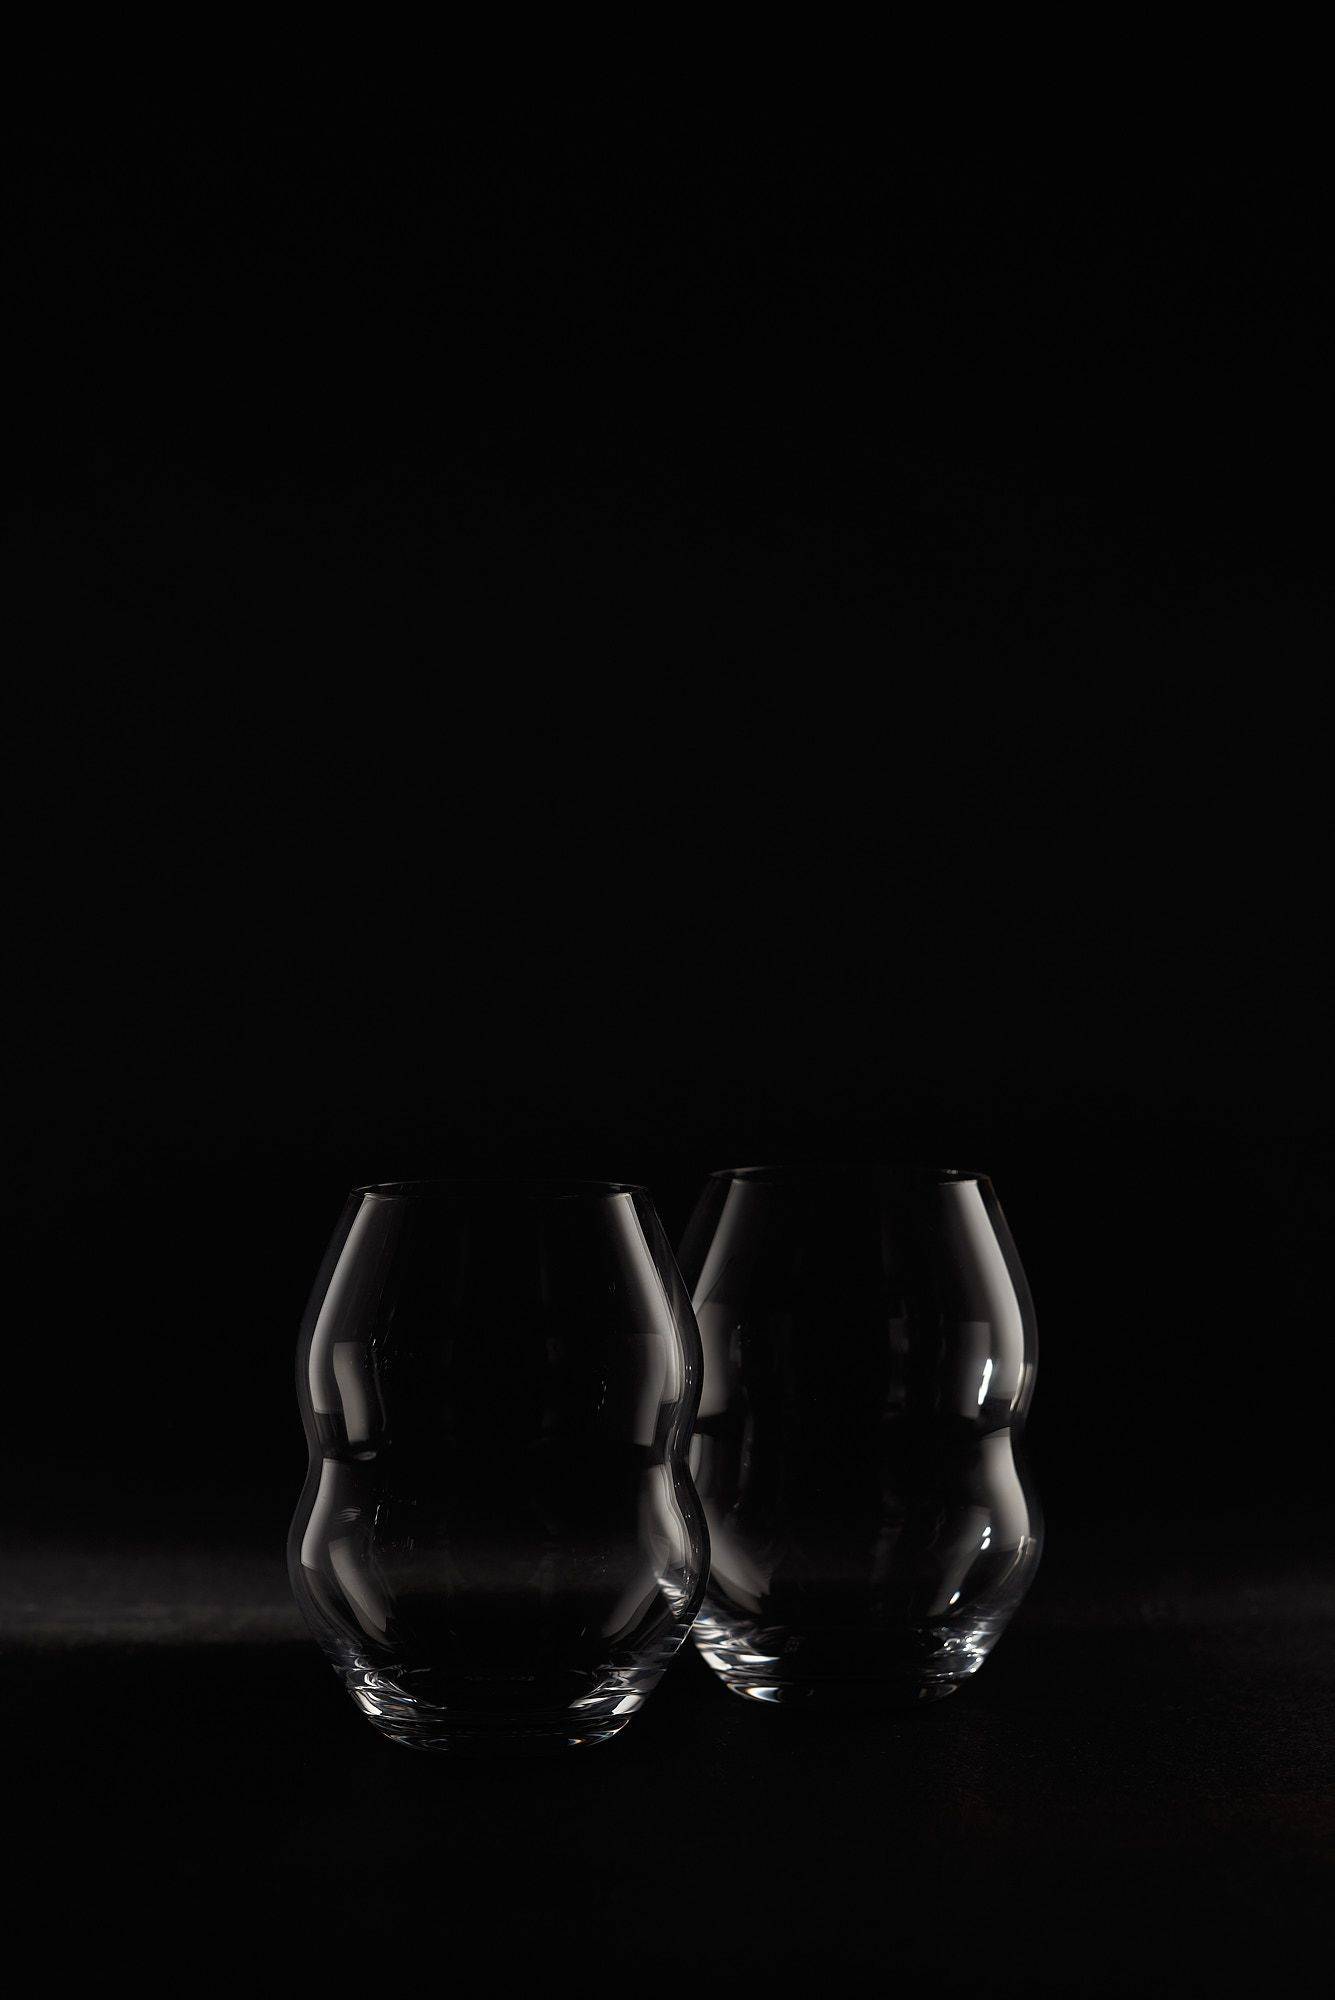 riedel veritas swirl glass on black background